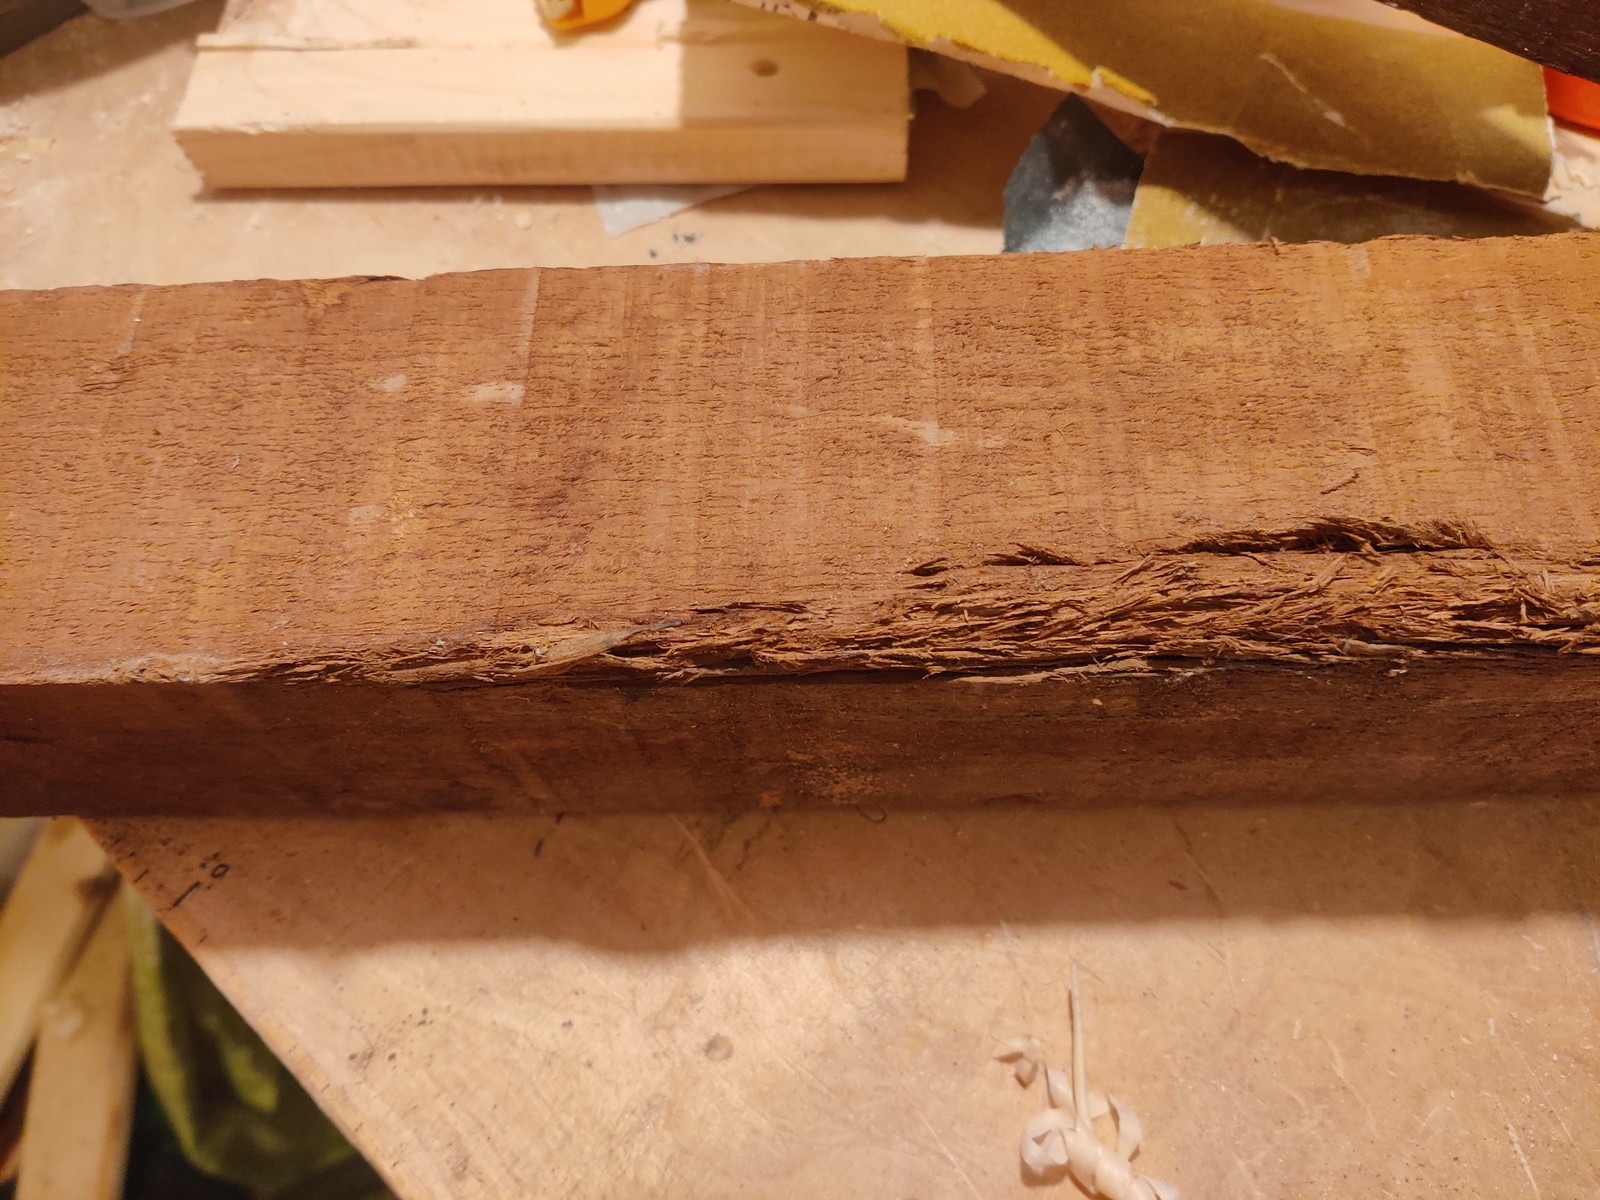 Mystery wood block